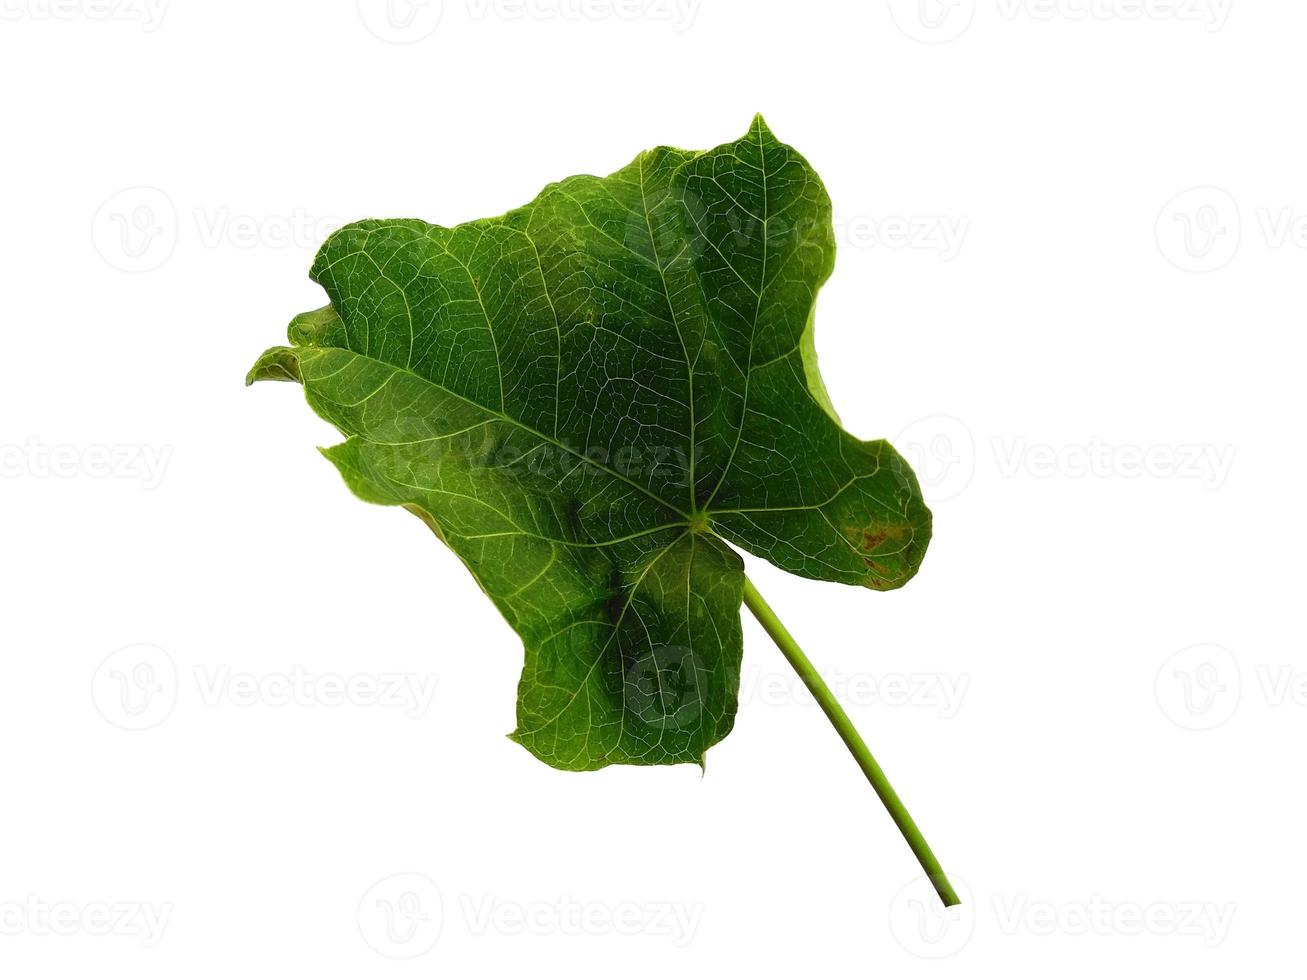 folha verde de ricinus communis sobre fundo branco foto